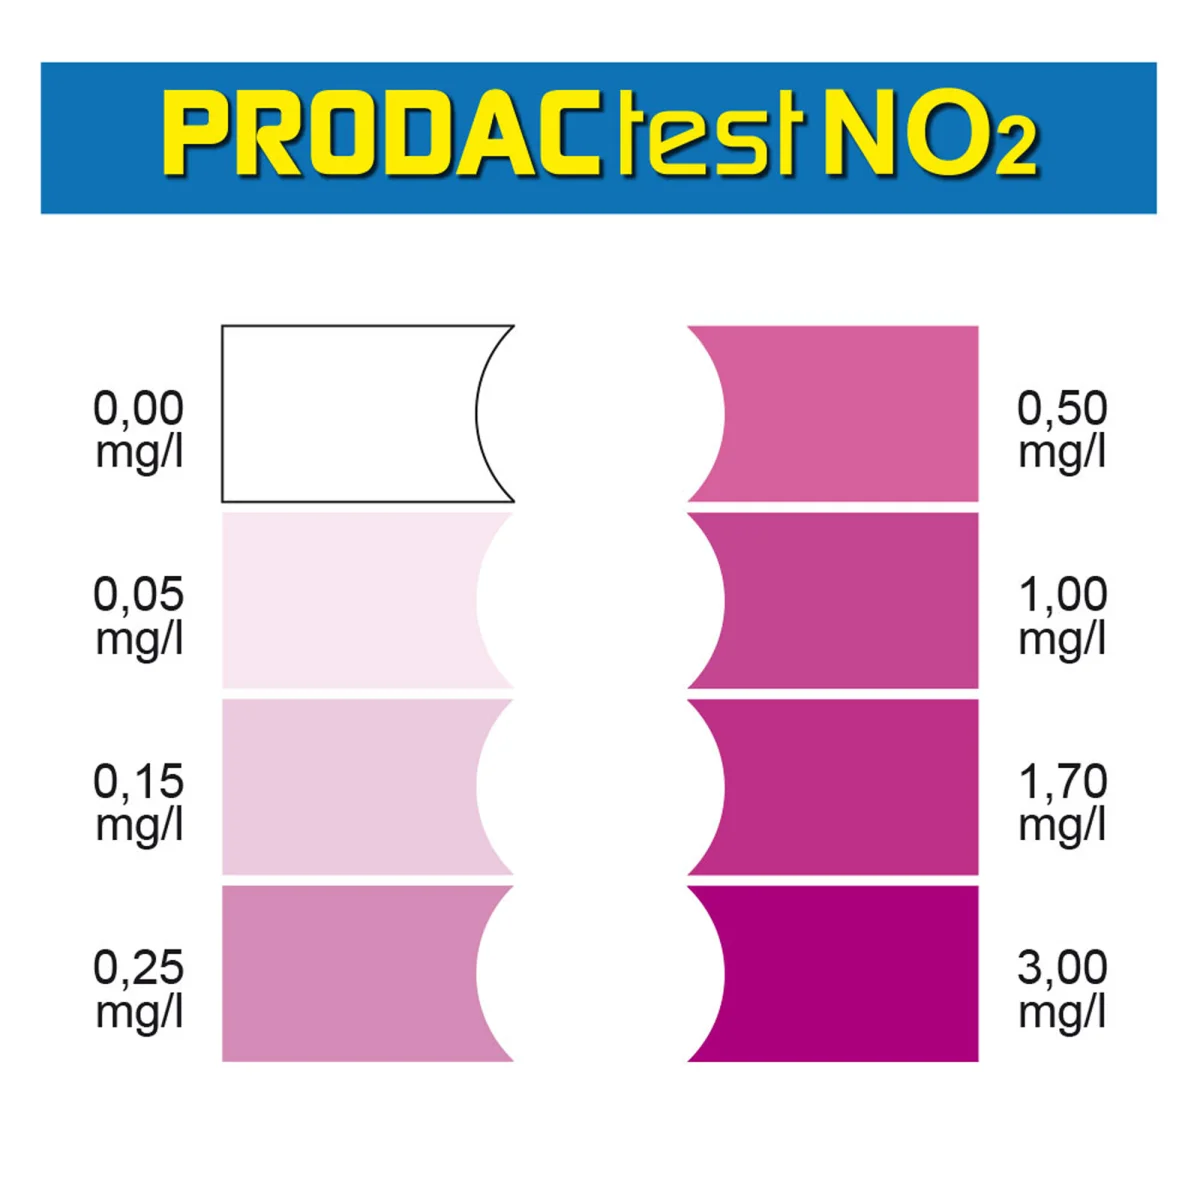 PRODACtest NO2 Farbkarte